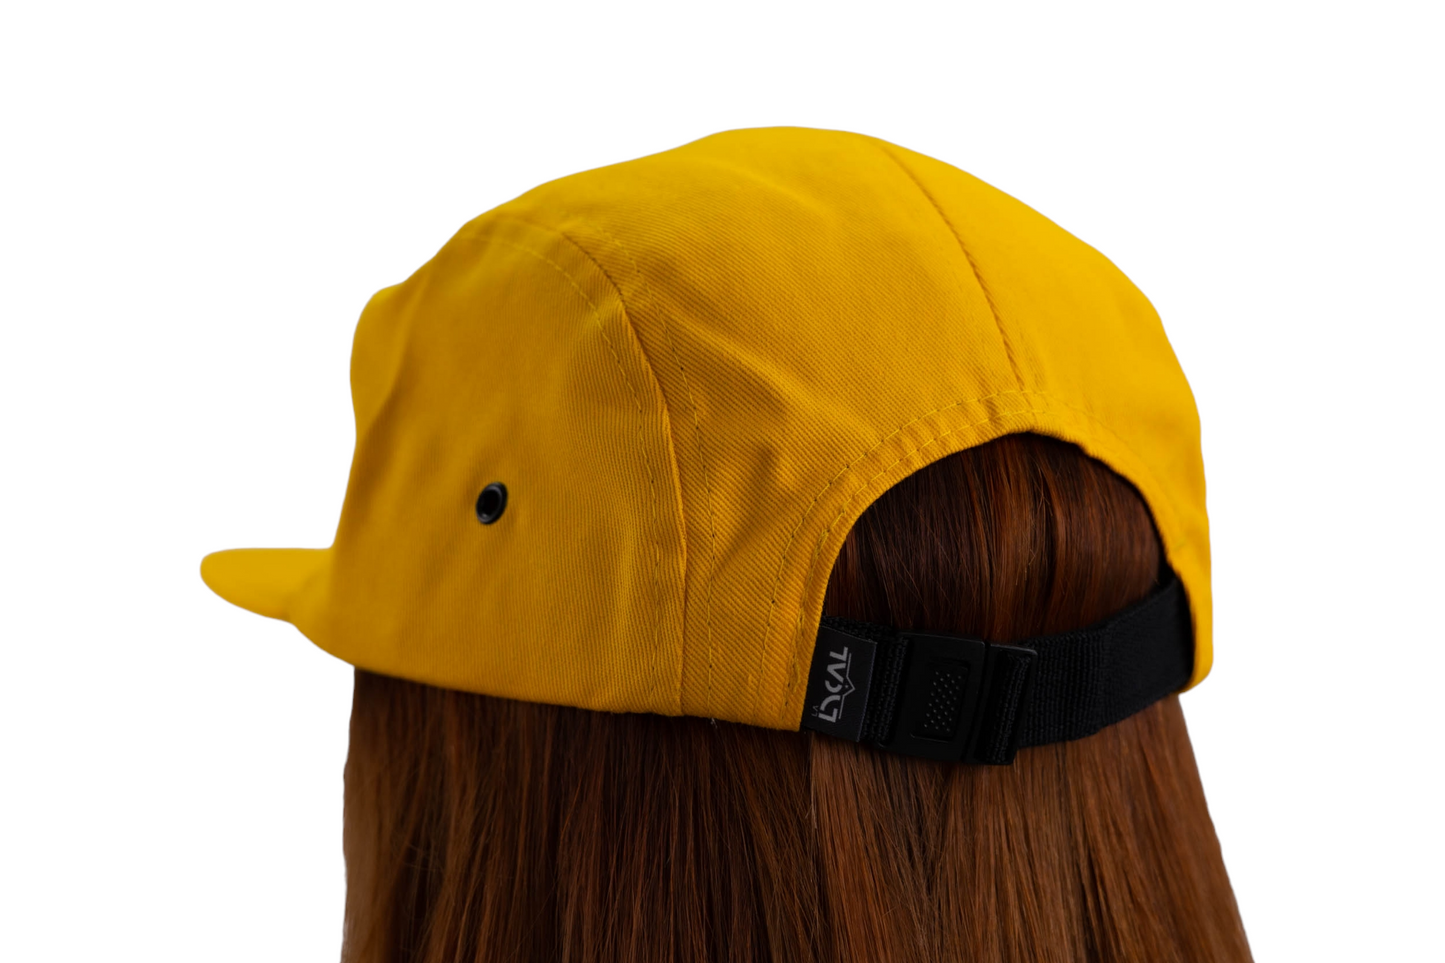 "BEE" 5 PANNEL HAT